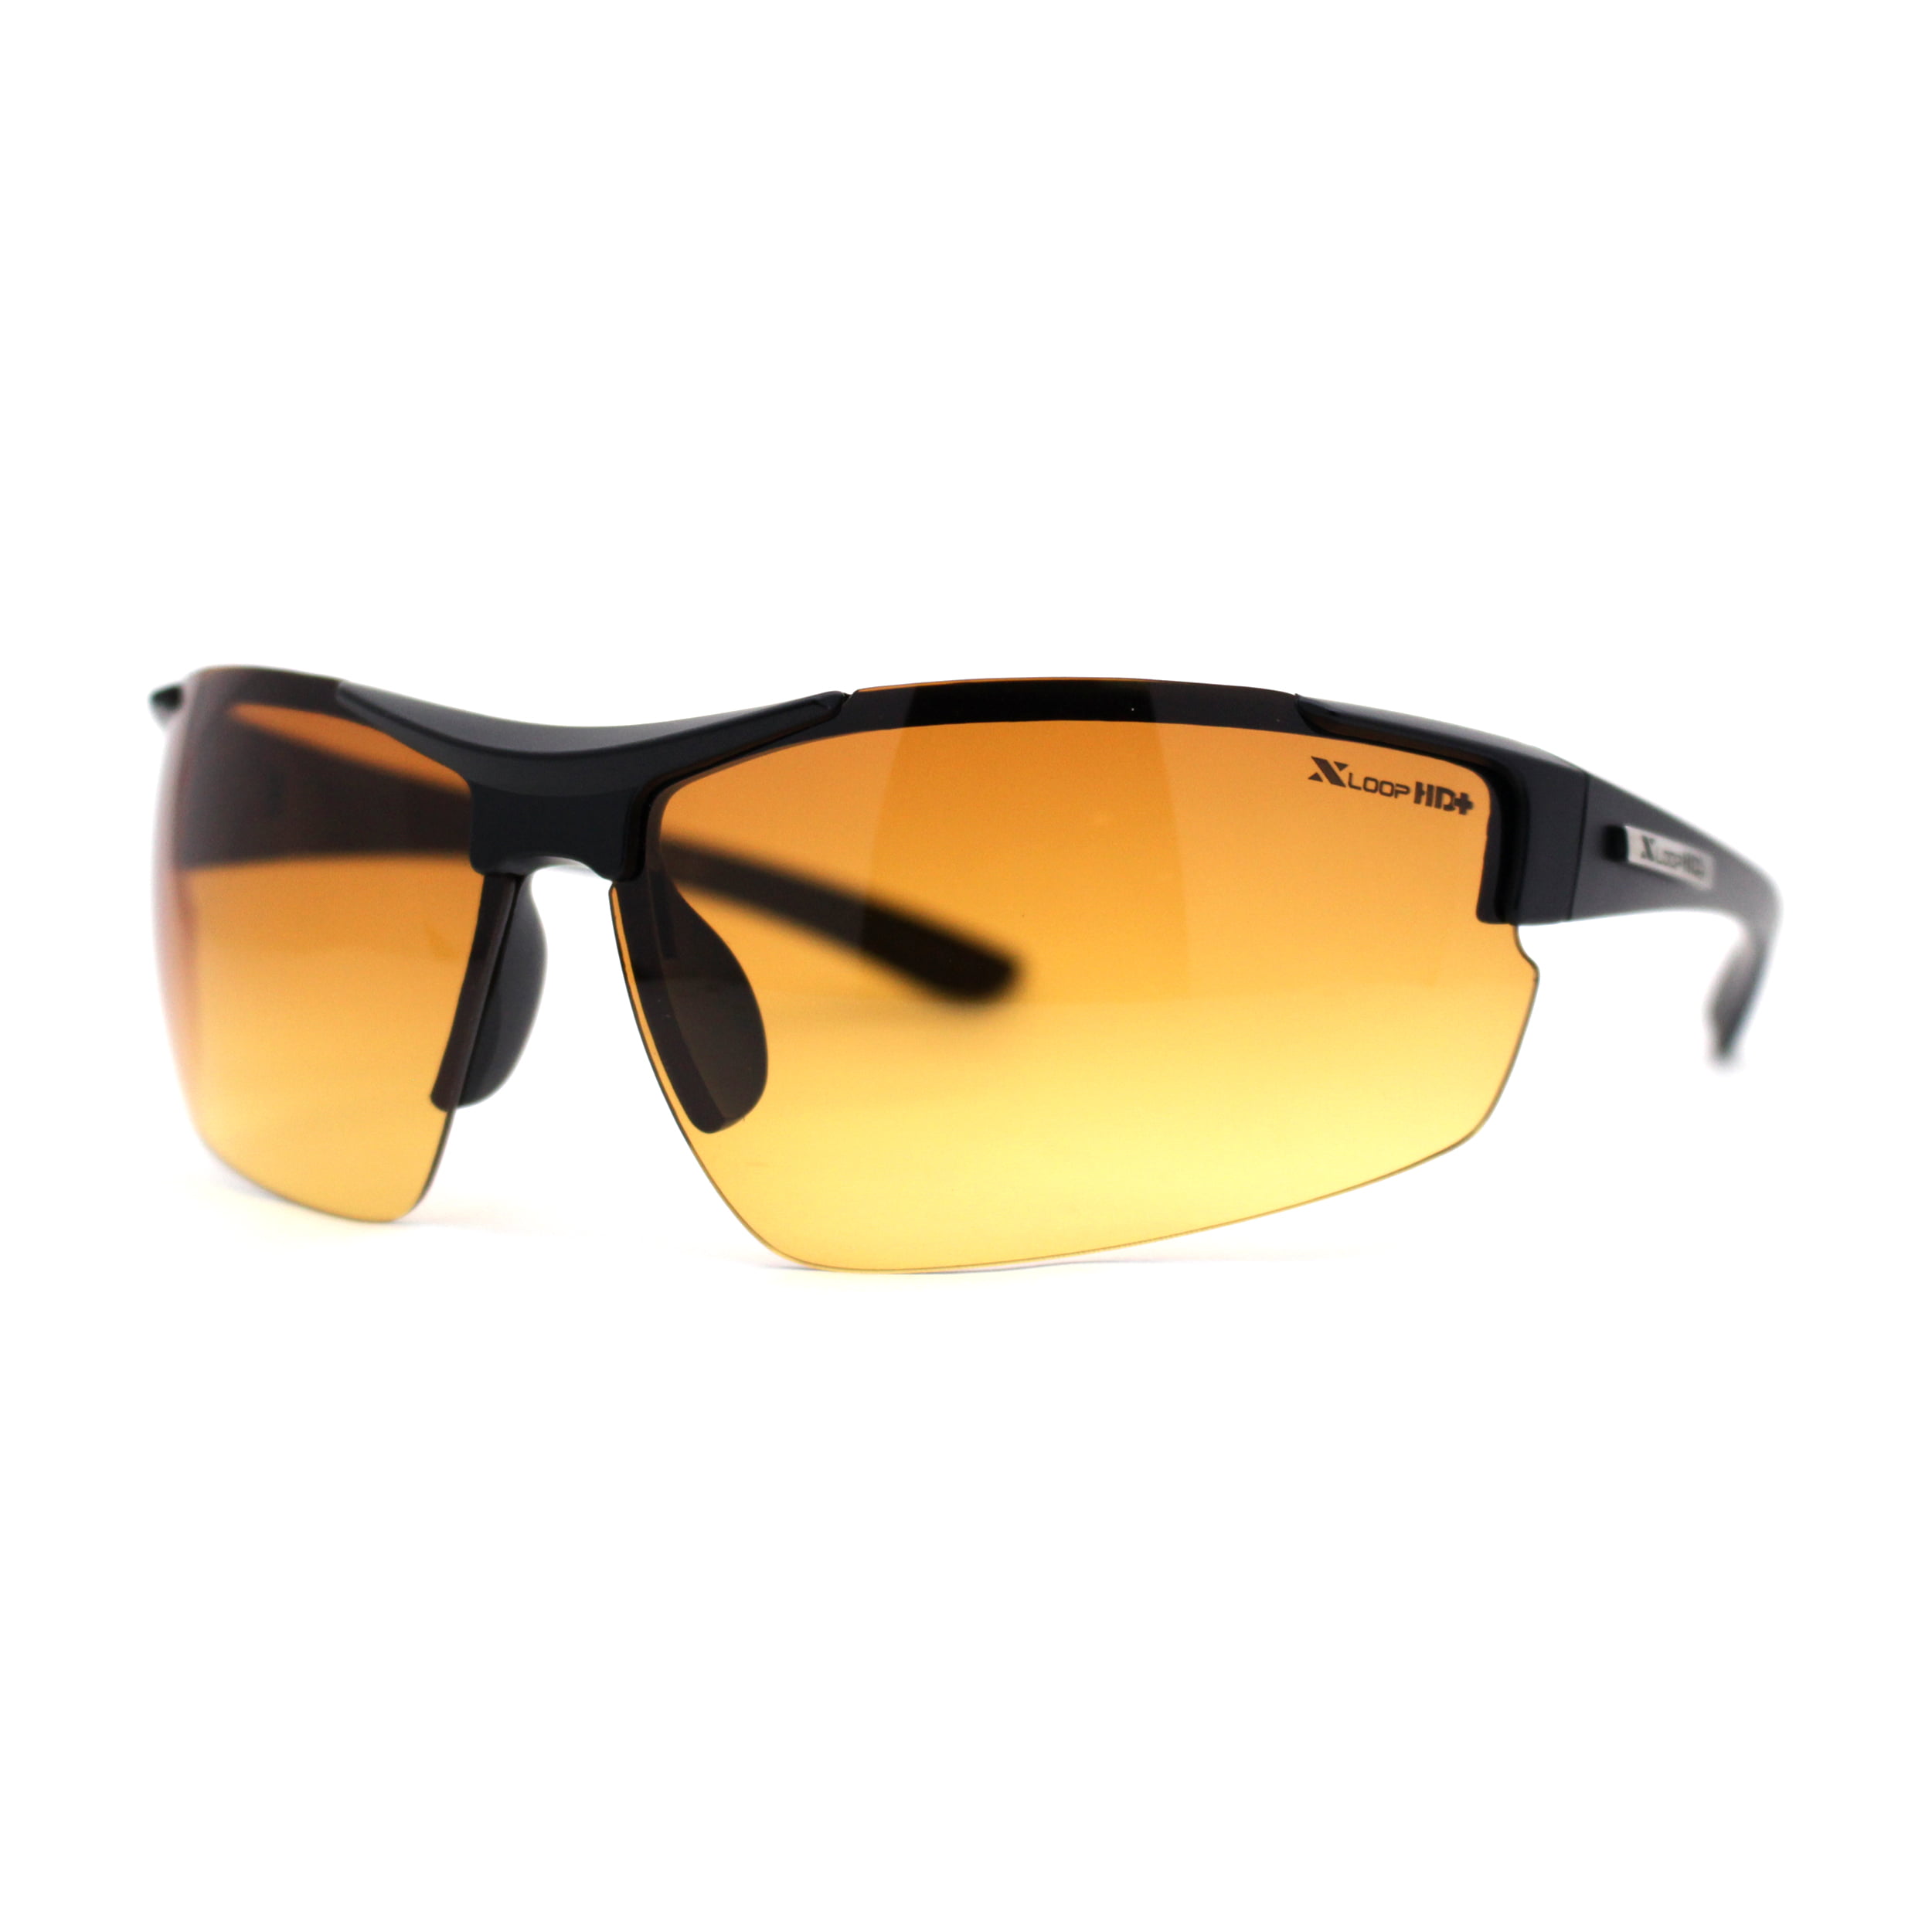 SA106 Xloop HD Driving Lens Mens Sport Wrap Around Half Rim Sunglasses Black Clear, Men's, Size: One Size